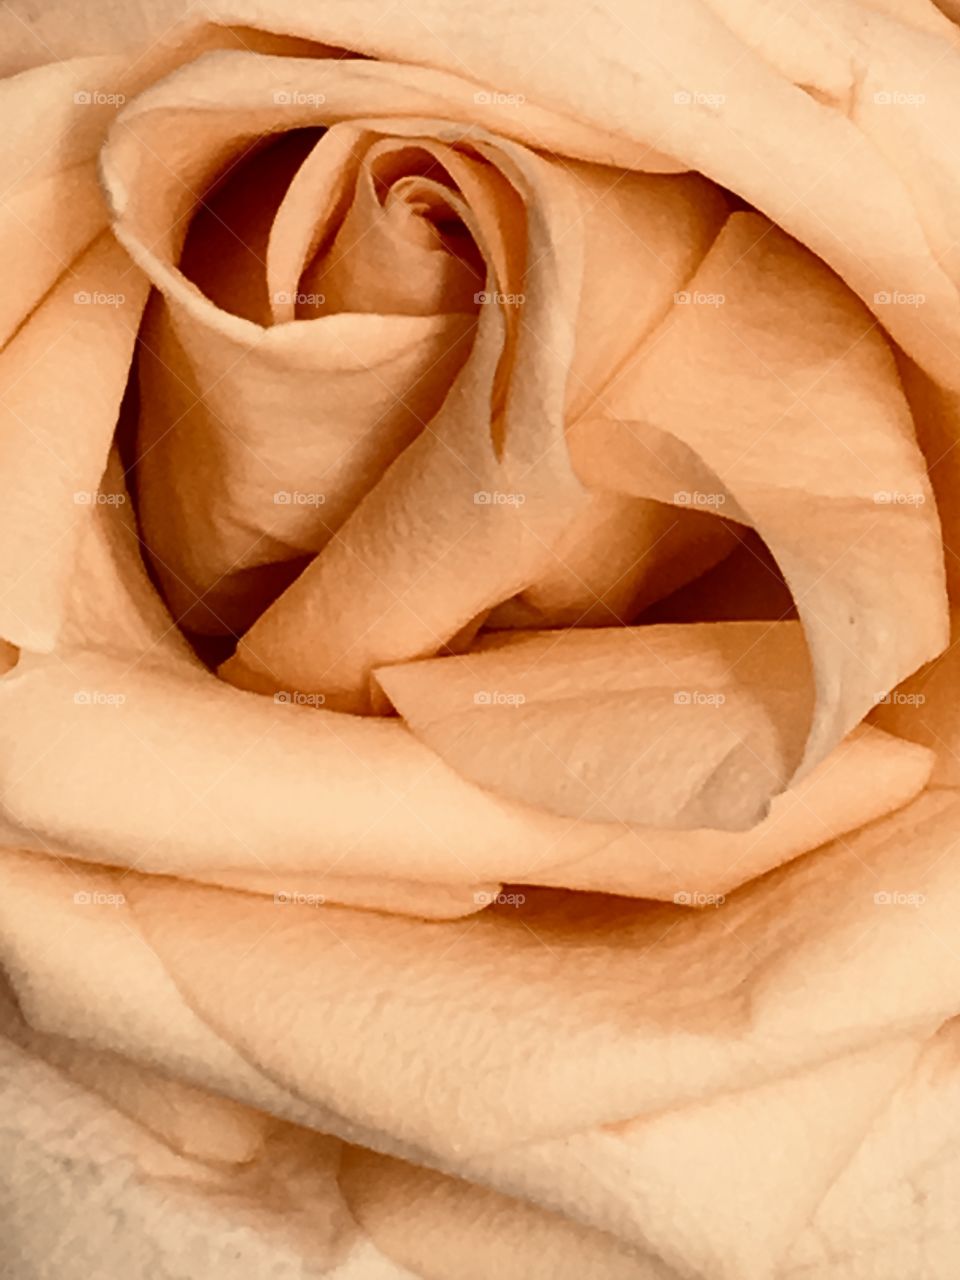 Close up of rose